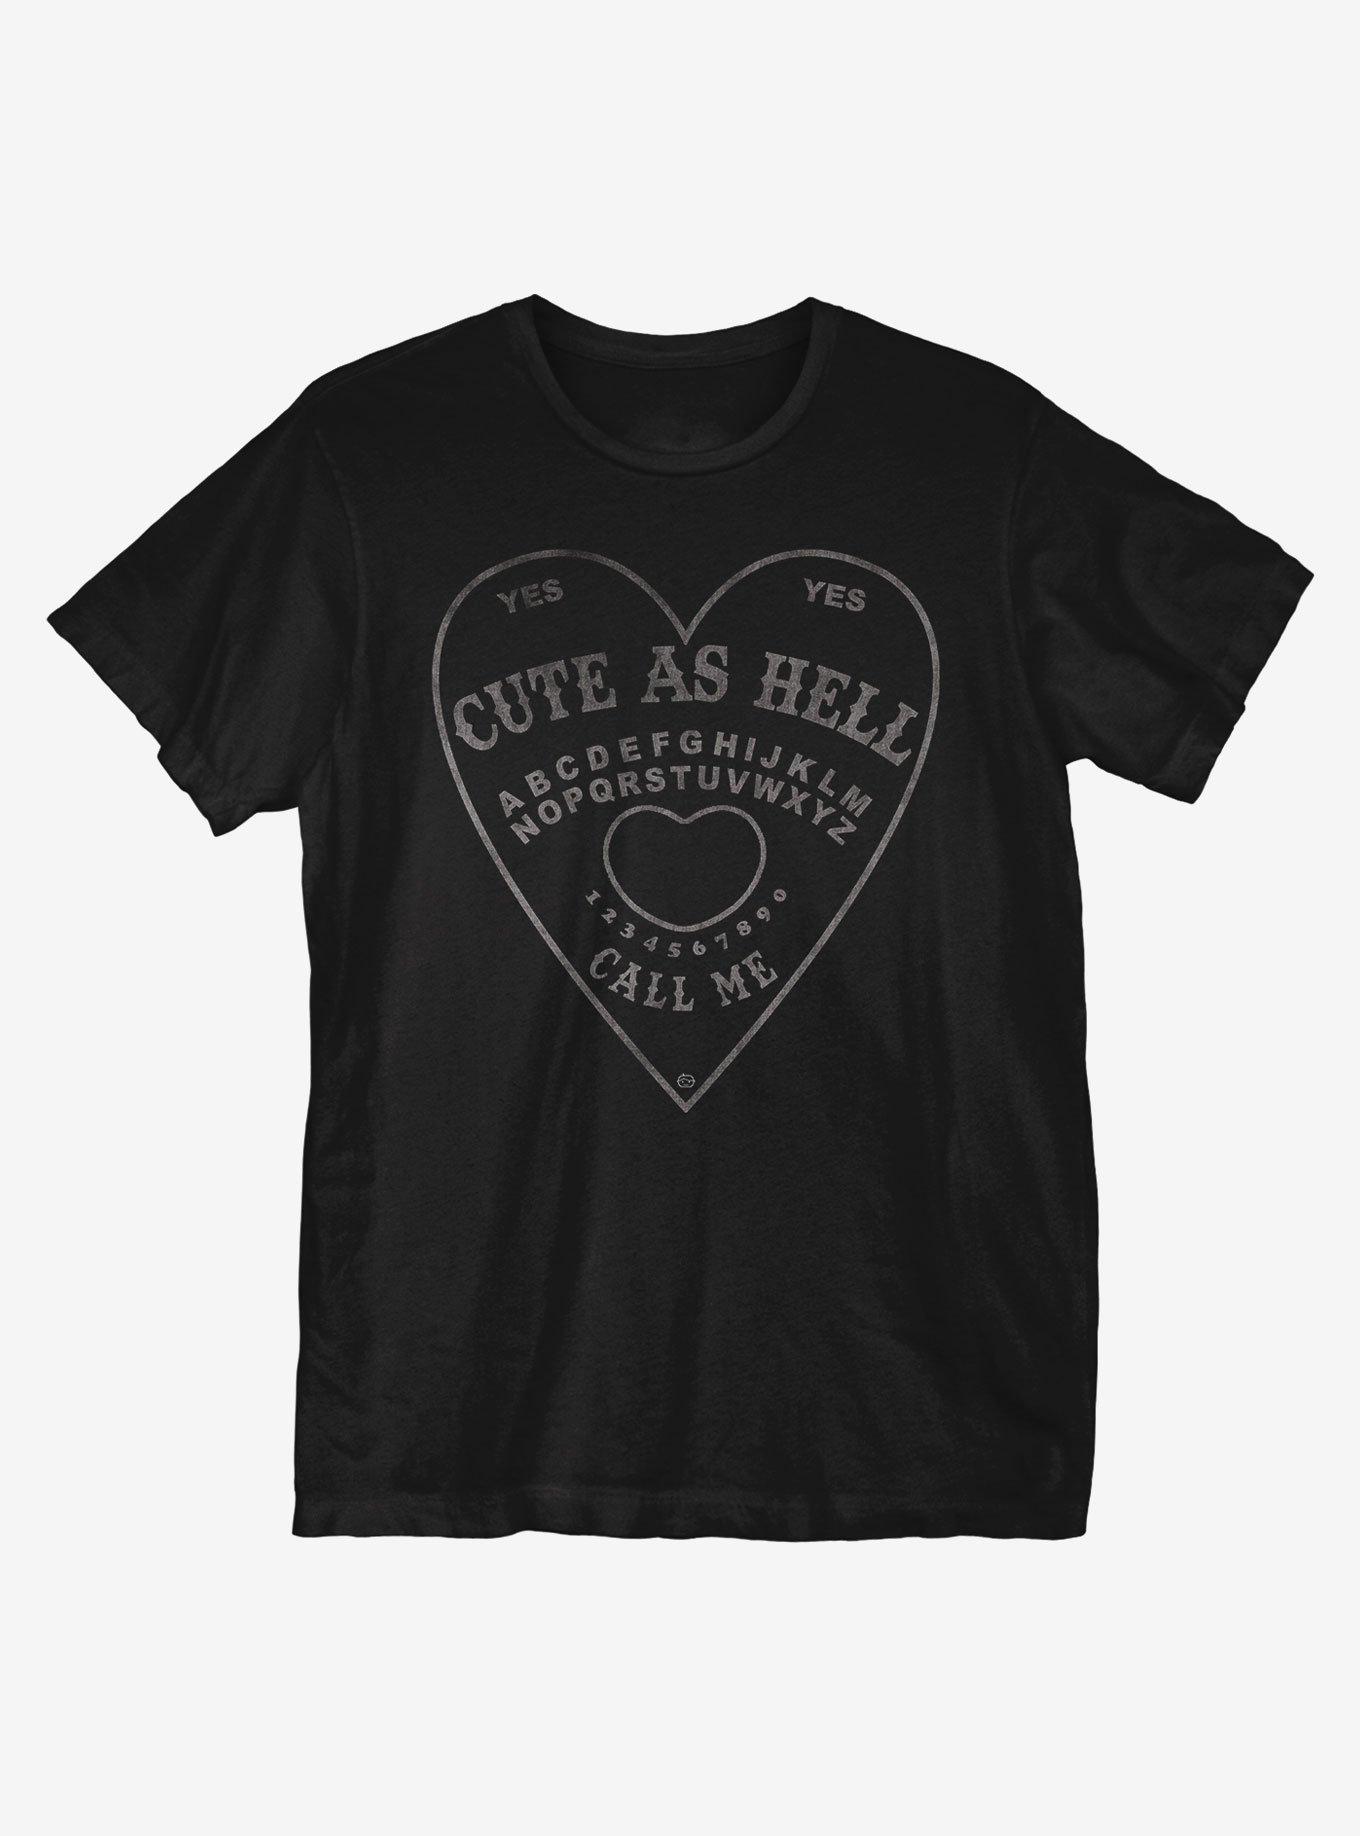 Cute As Hell T-Shirt